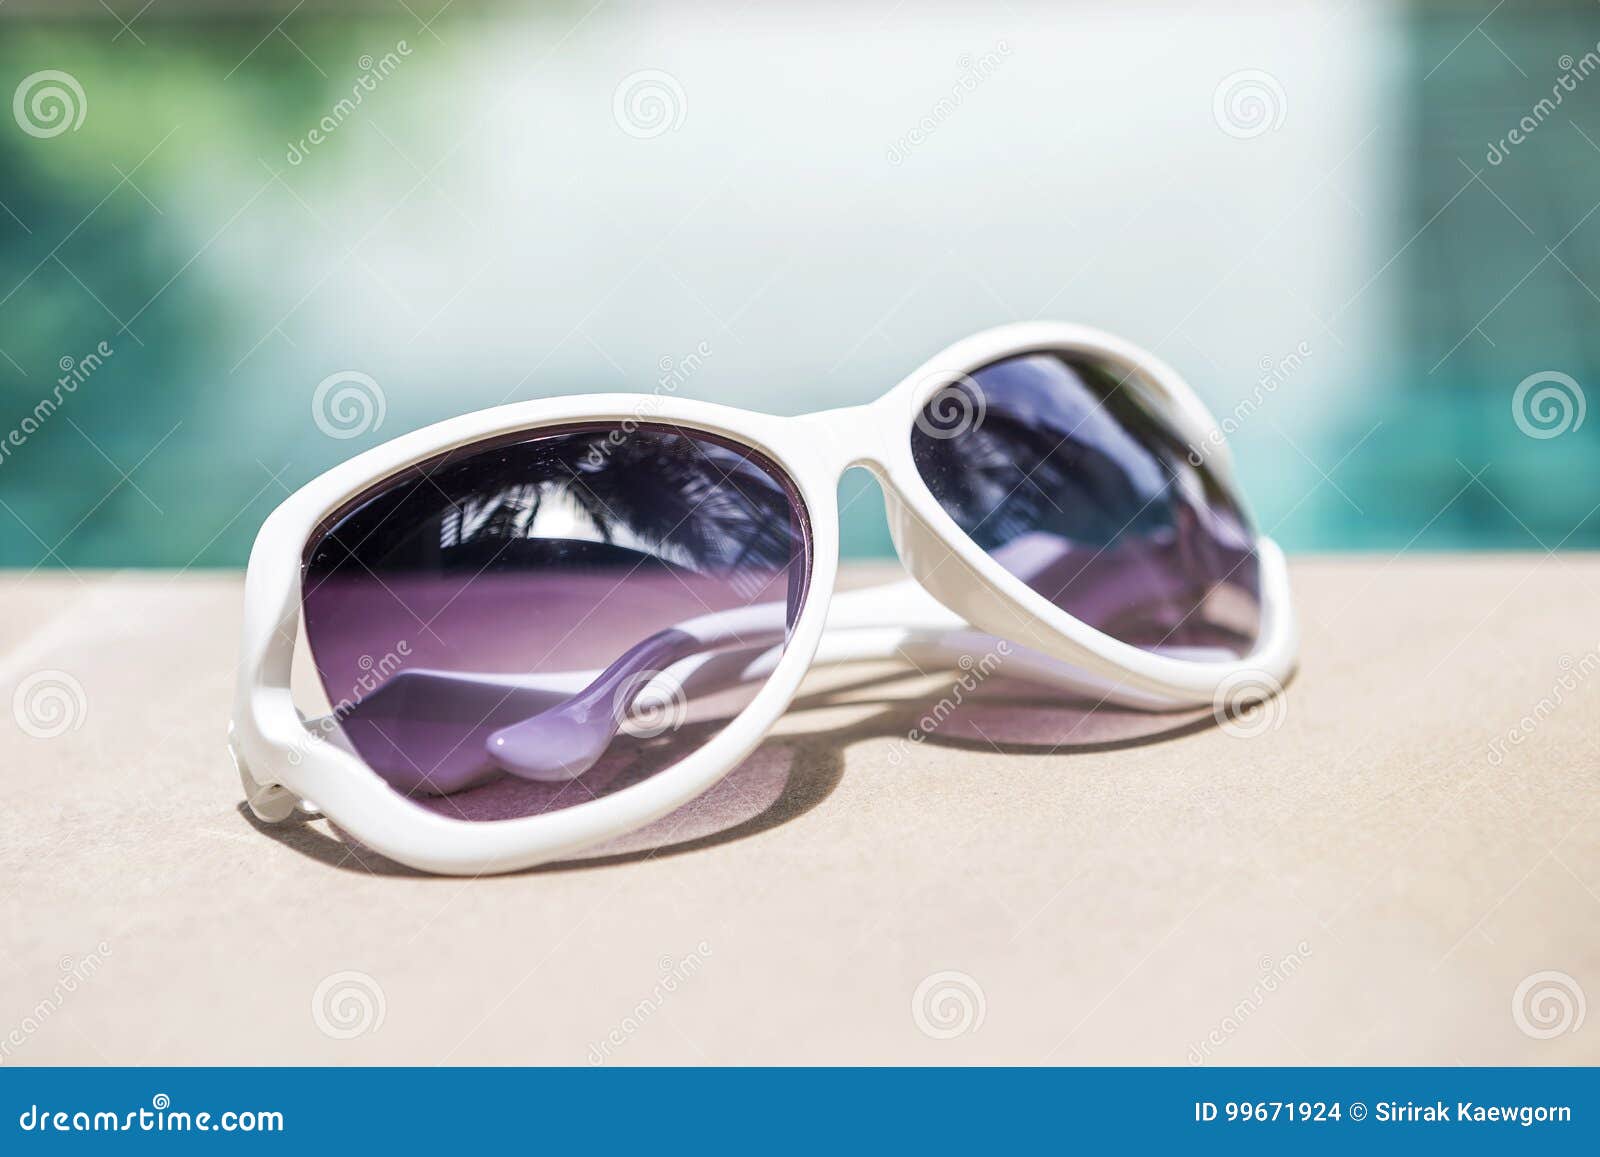 Design White Sunglasses on Swimming Pool Edge Stock Photo - Image of ...